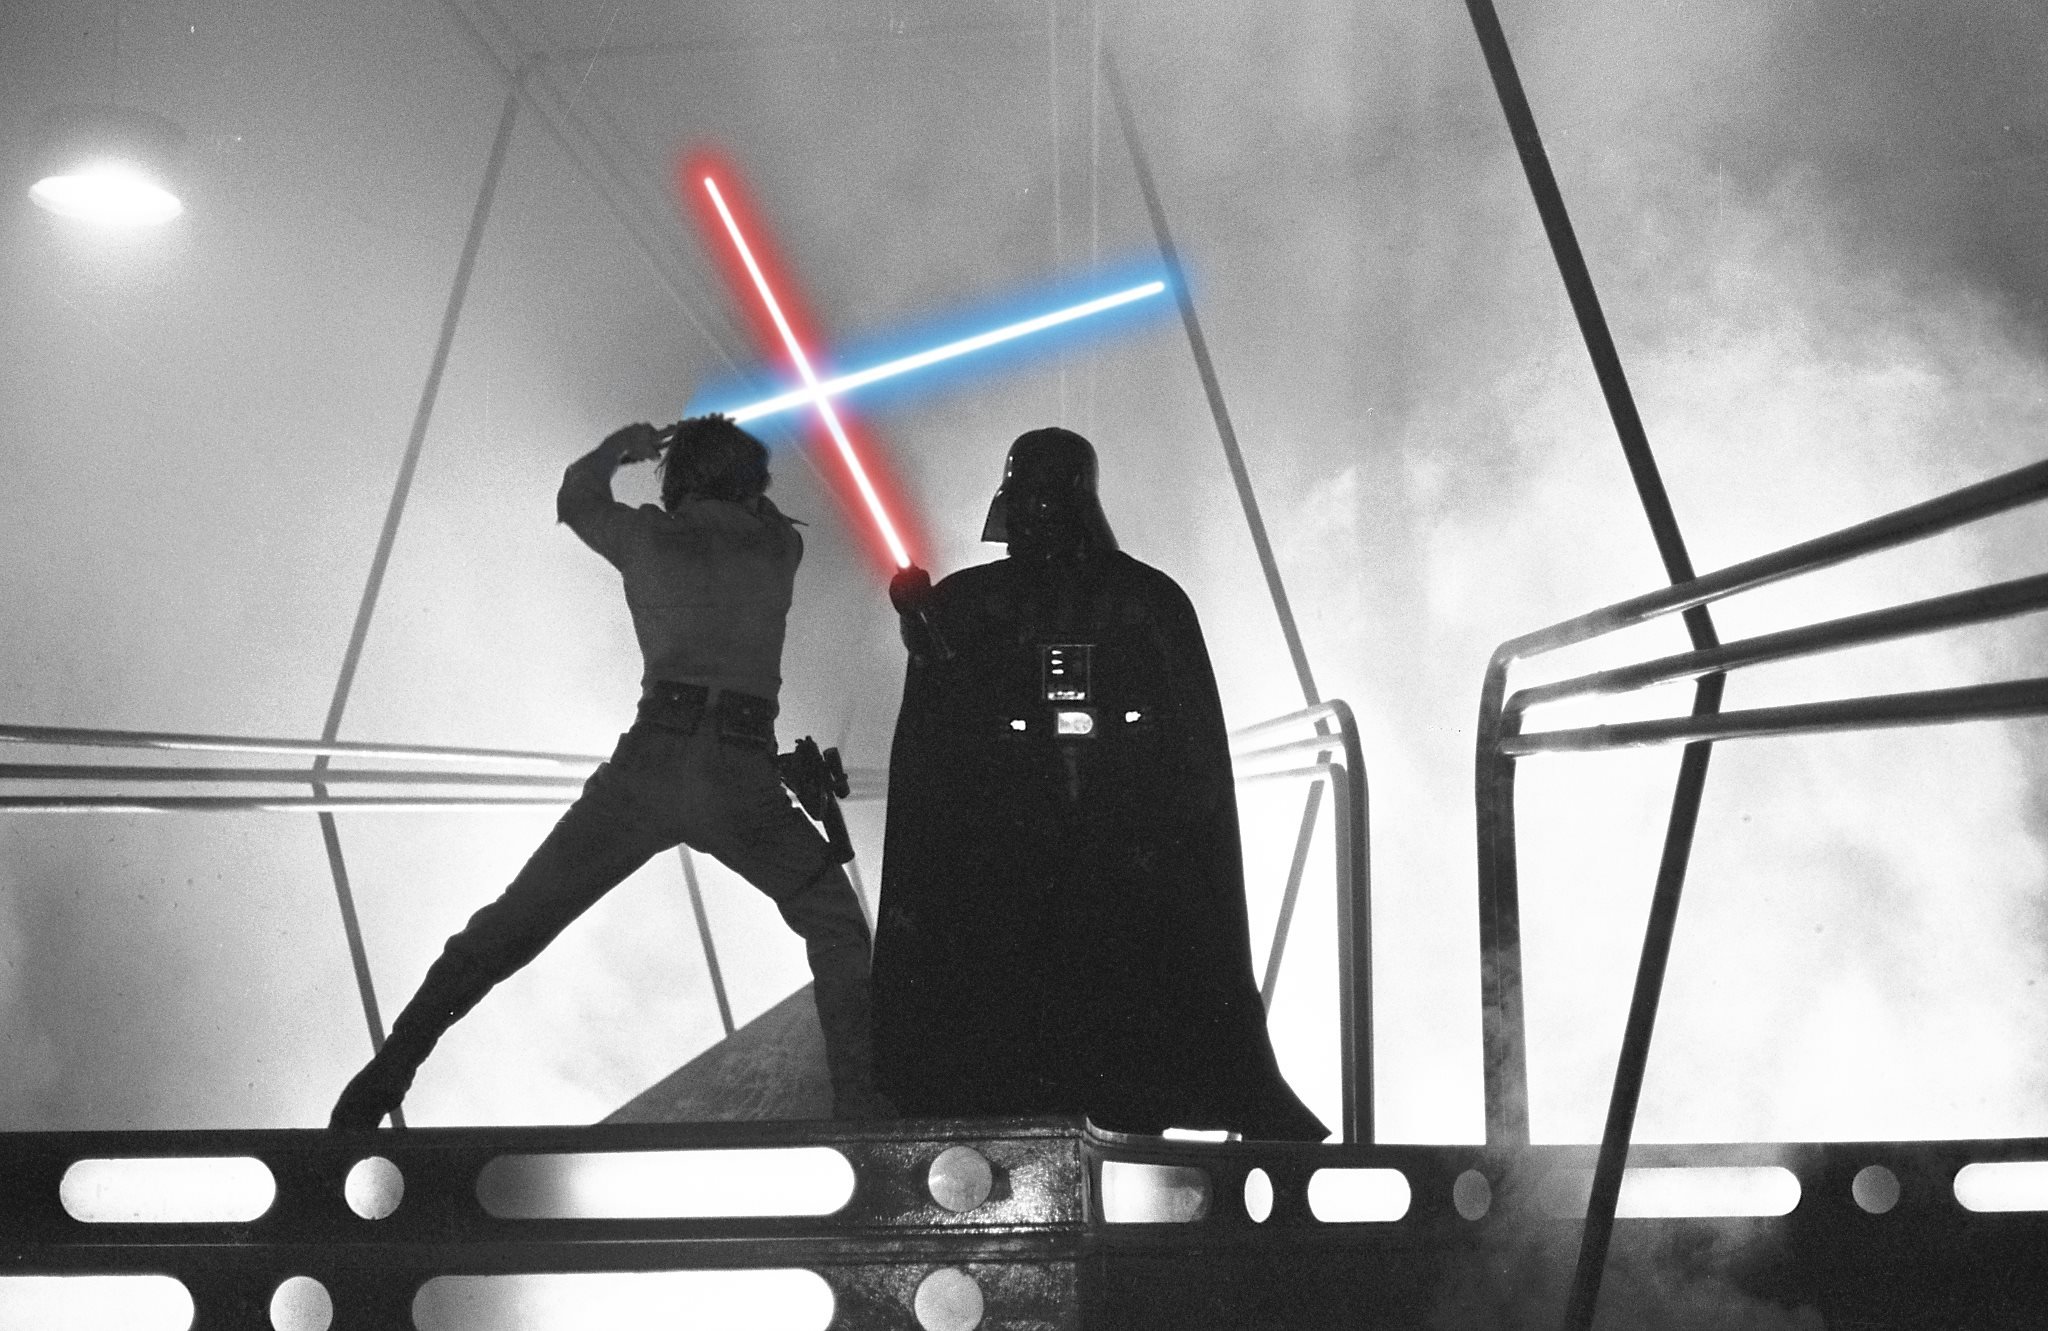 Darth Vader Lightsaber Luke Skywalker Star Wars Episode V The Empire Strikes Back 2048x1331